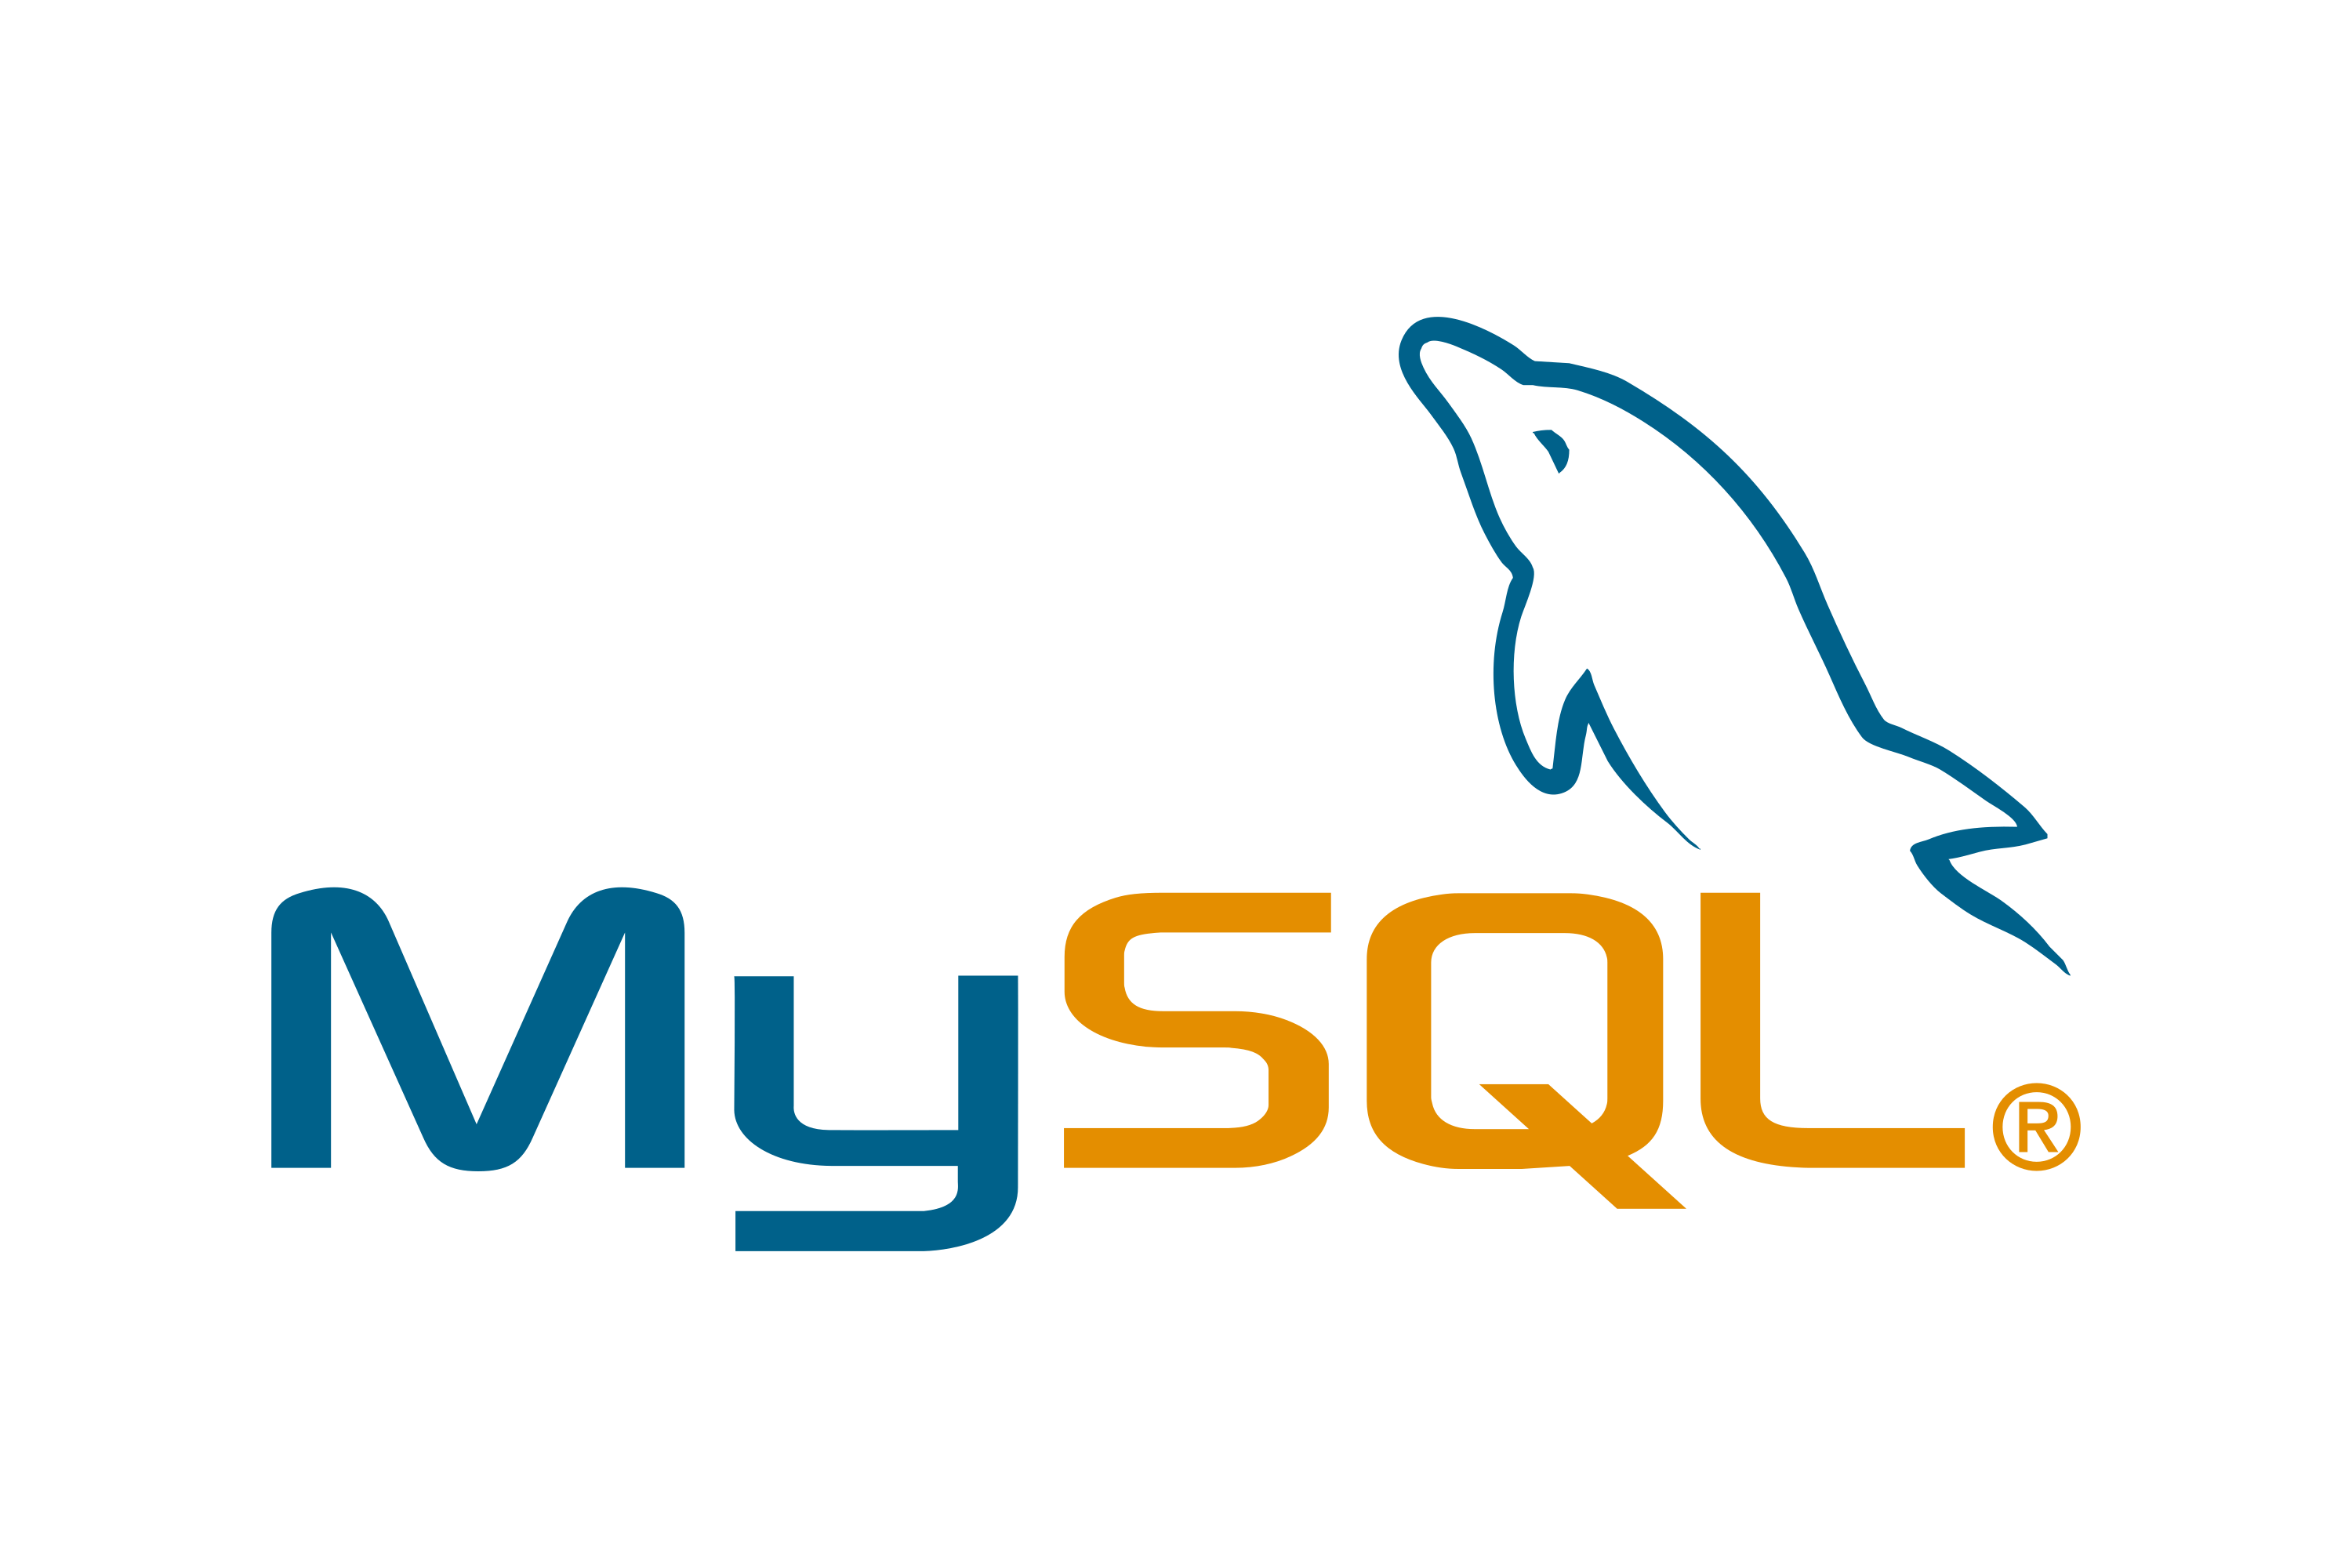 MySQL For Windows